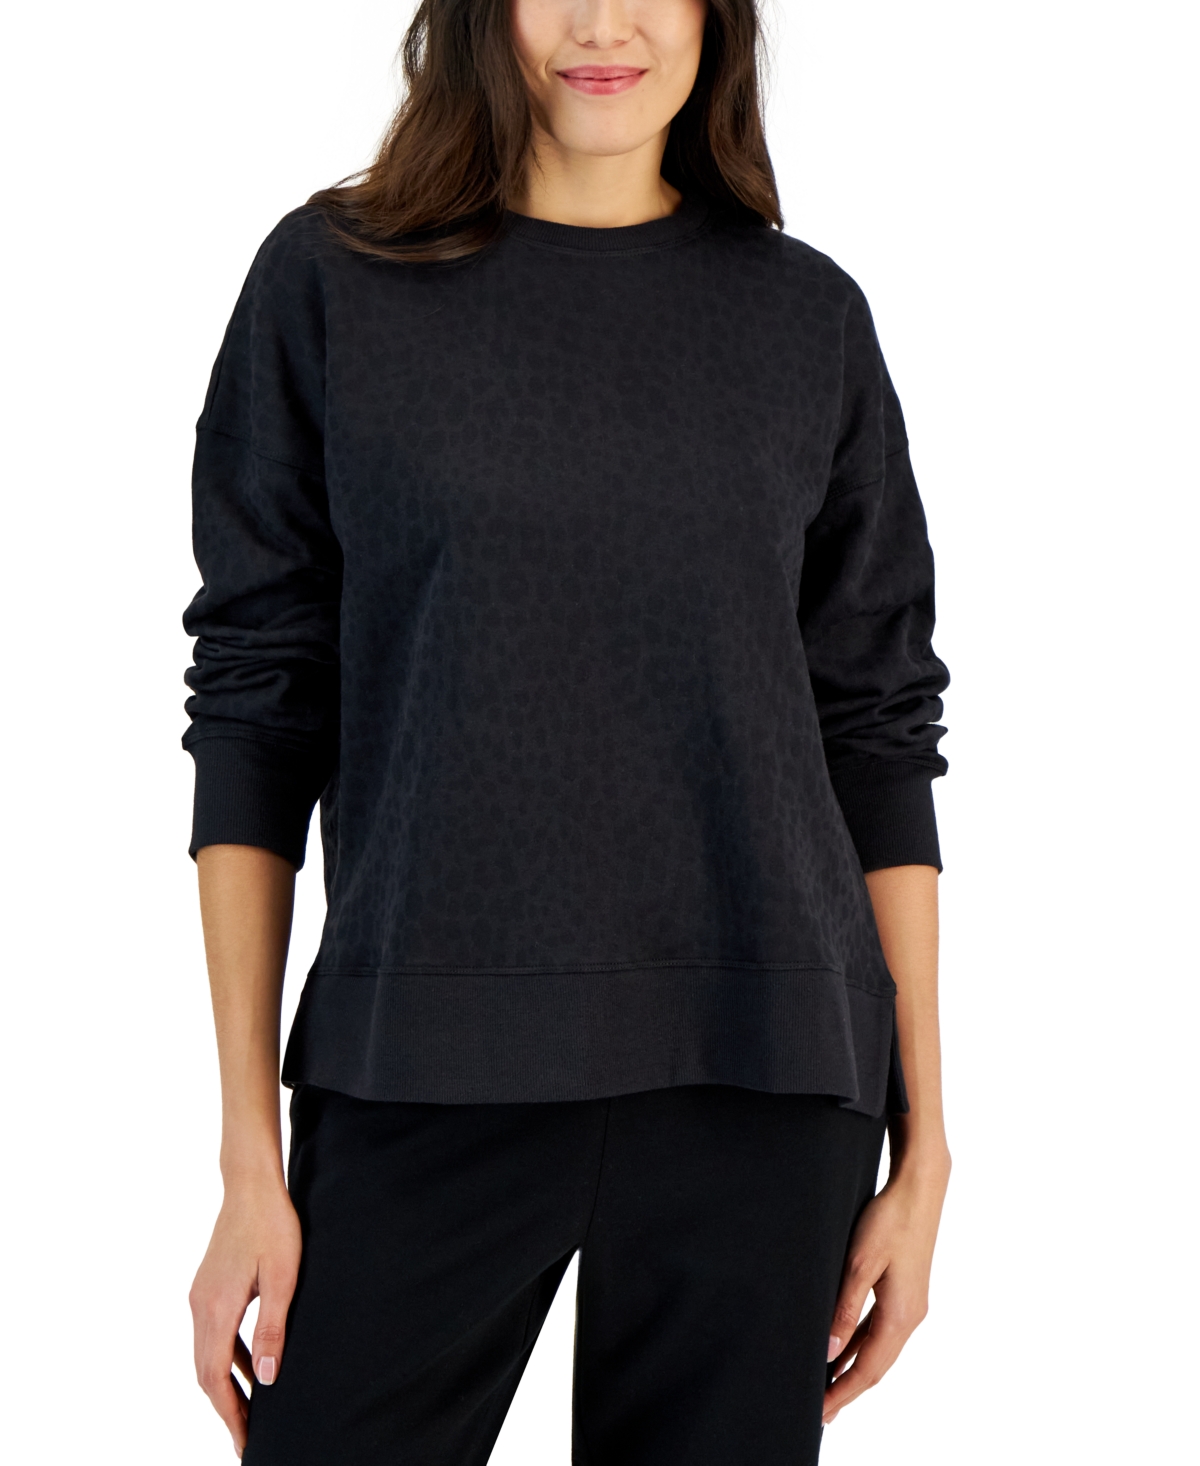 Women's Fleece Crewneck Sweatshirt, Created for Macy's - Cheetah